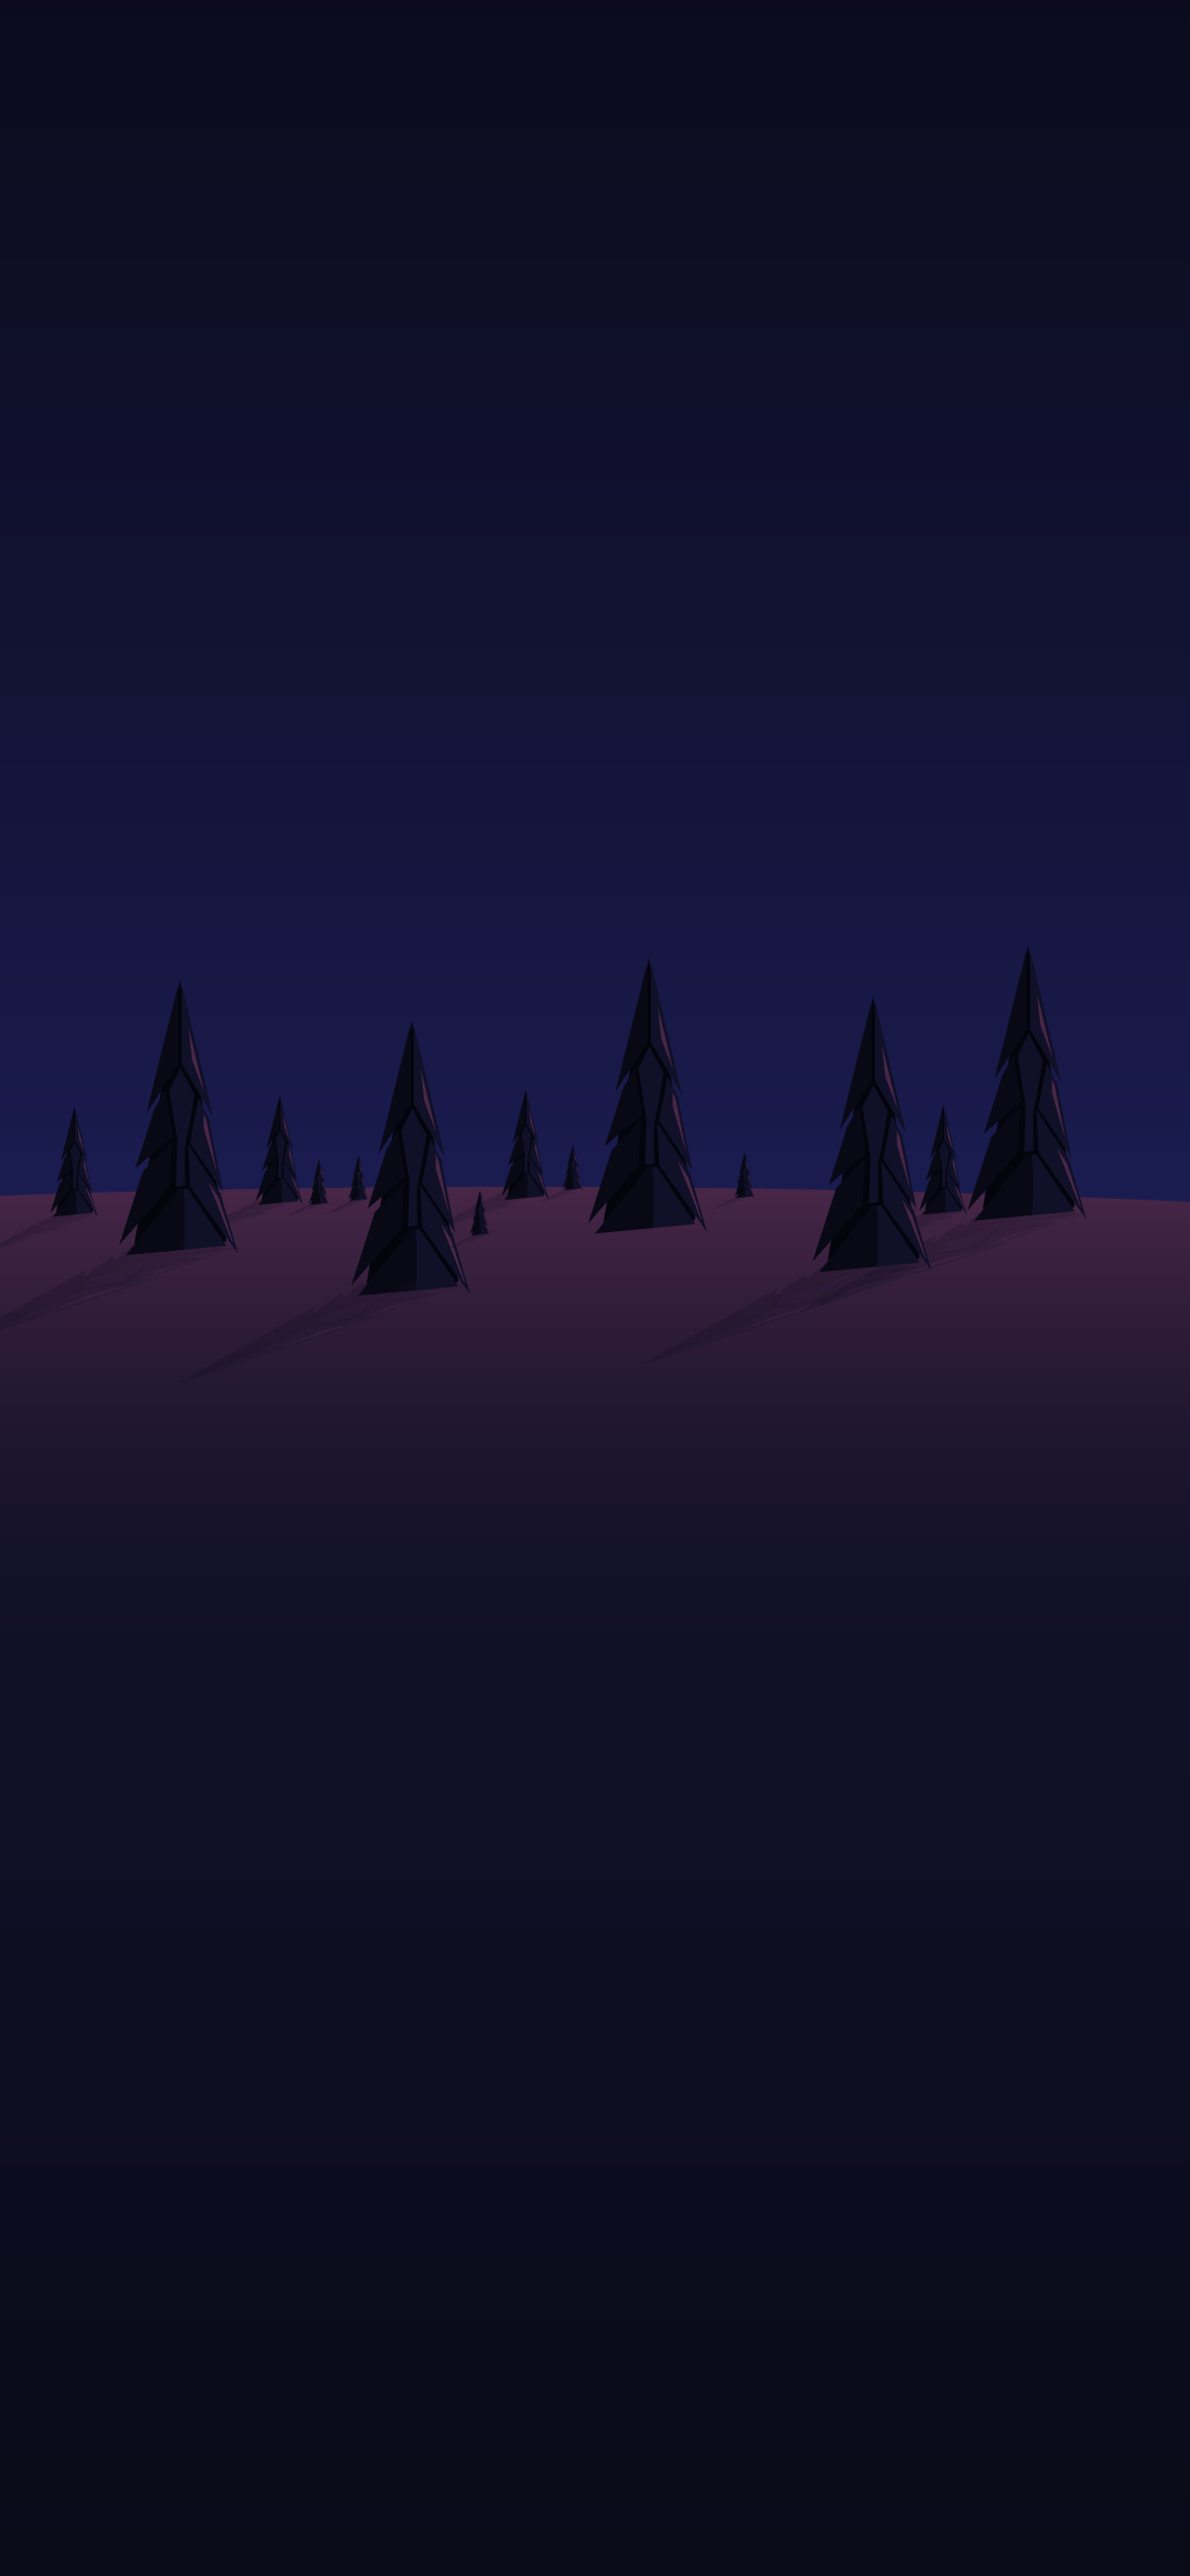 Minimal forest night